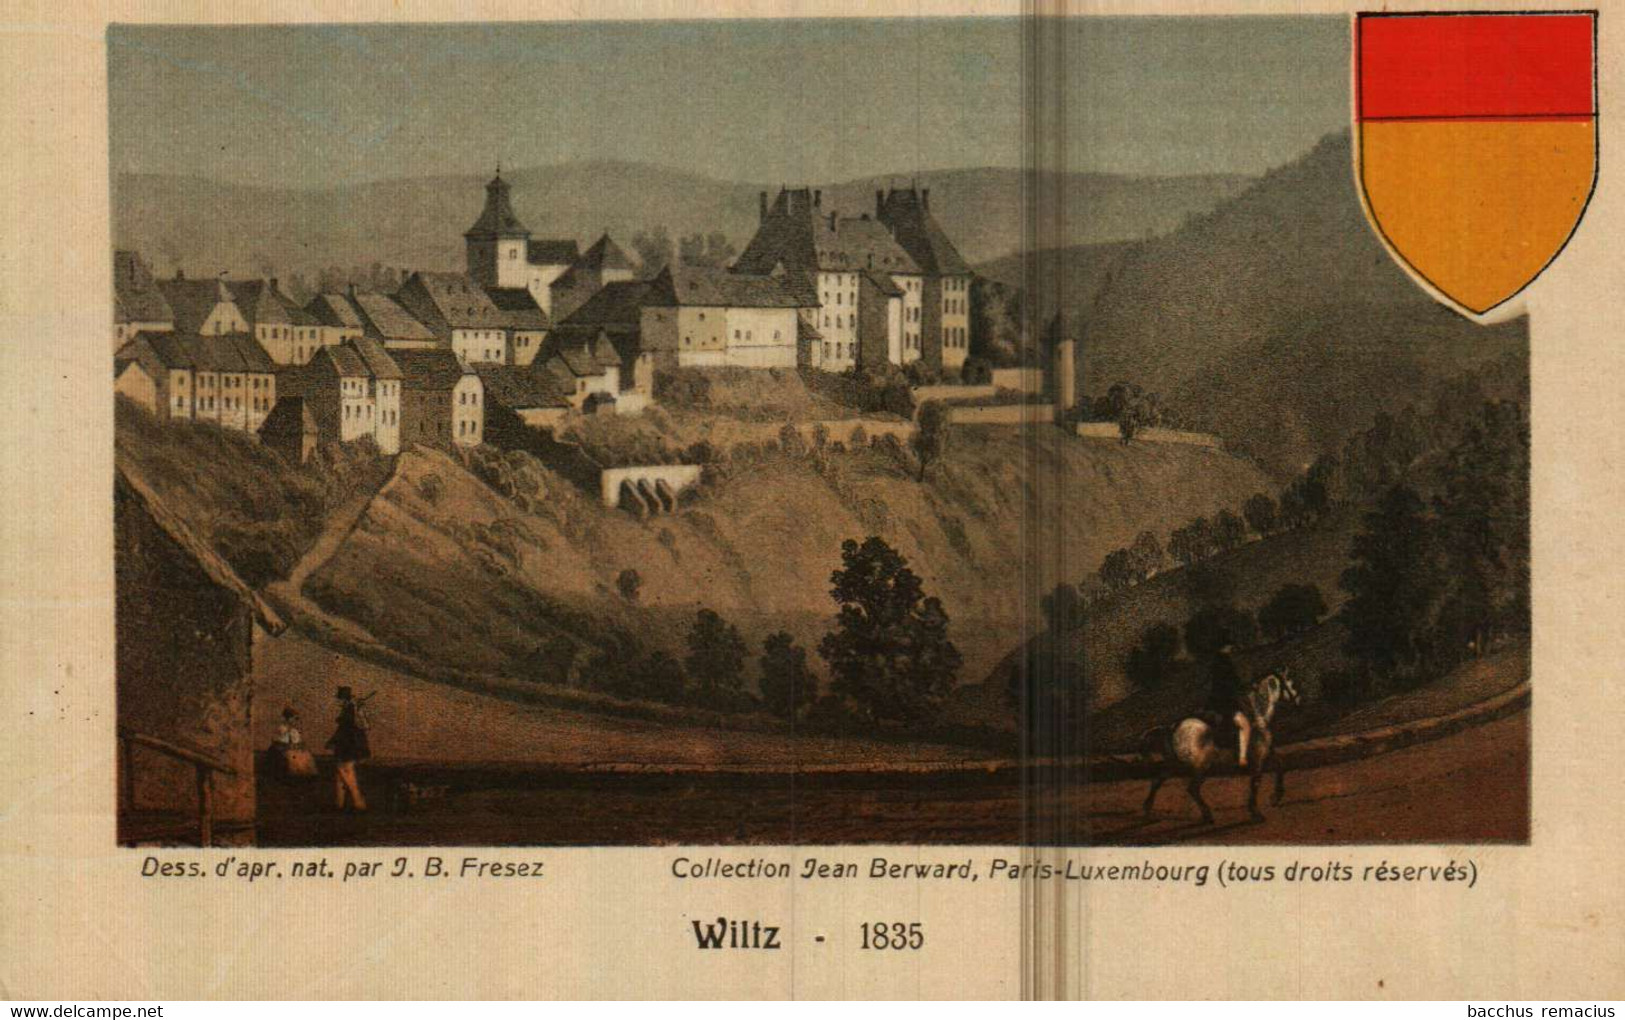 WILTZ - 1835 Dessin D'apr. J.B.Fresez - Wiltz